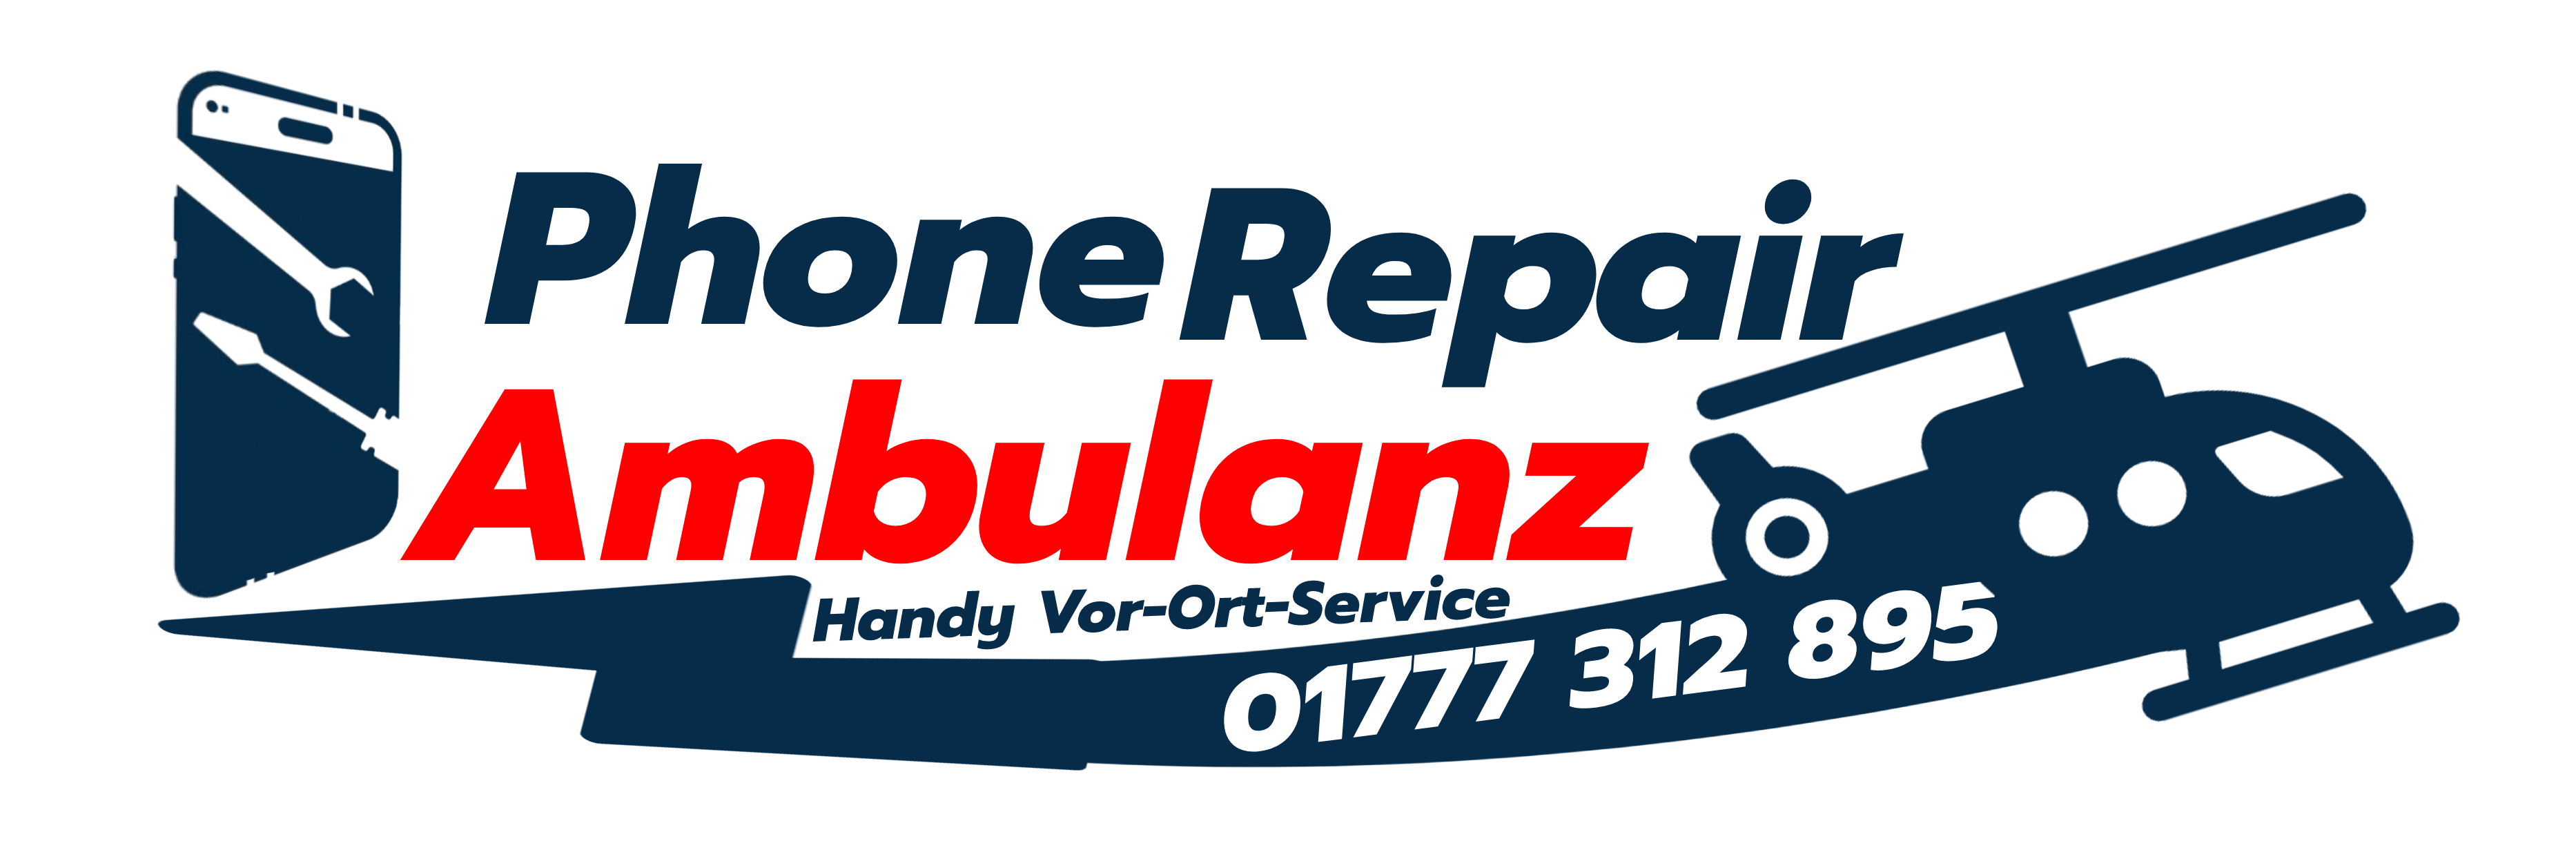 Phone Repair Ambulanz - Handyreparatur Regensburg logo